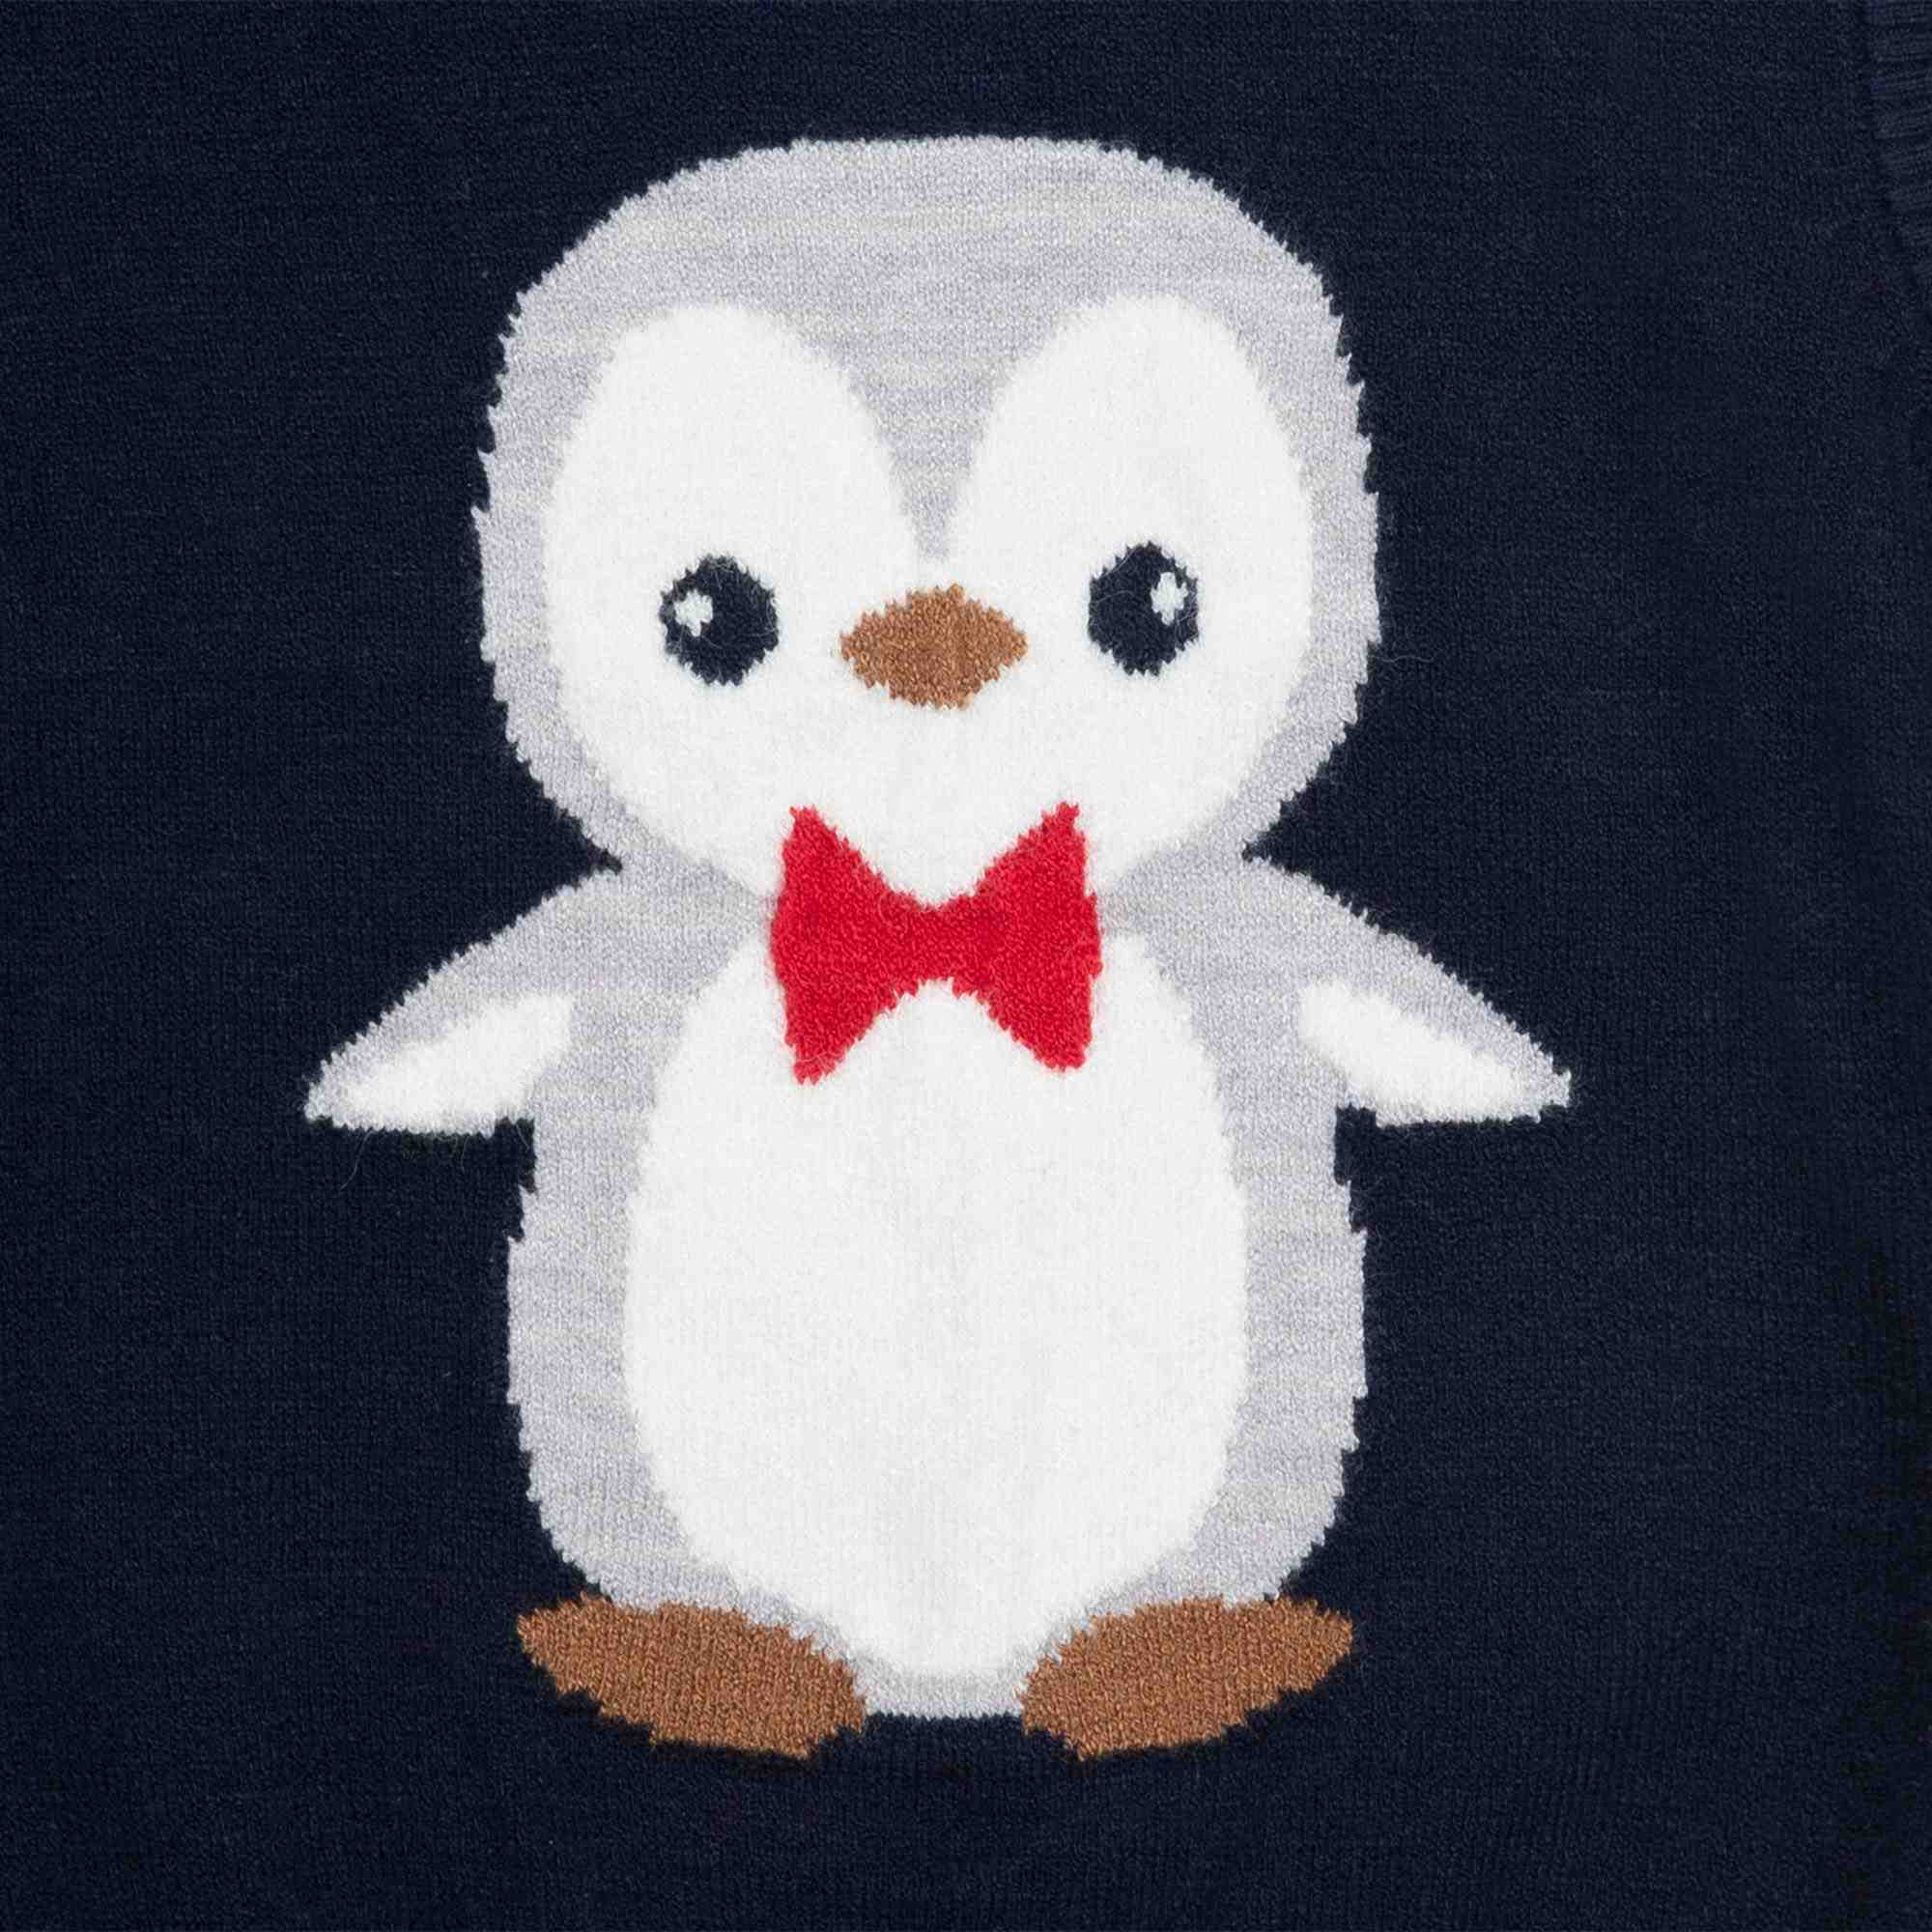 Mawi gilet tricot con pinguino - Mawi